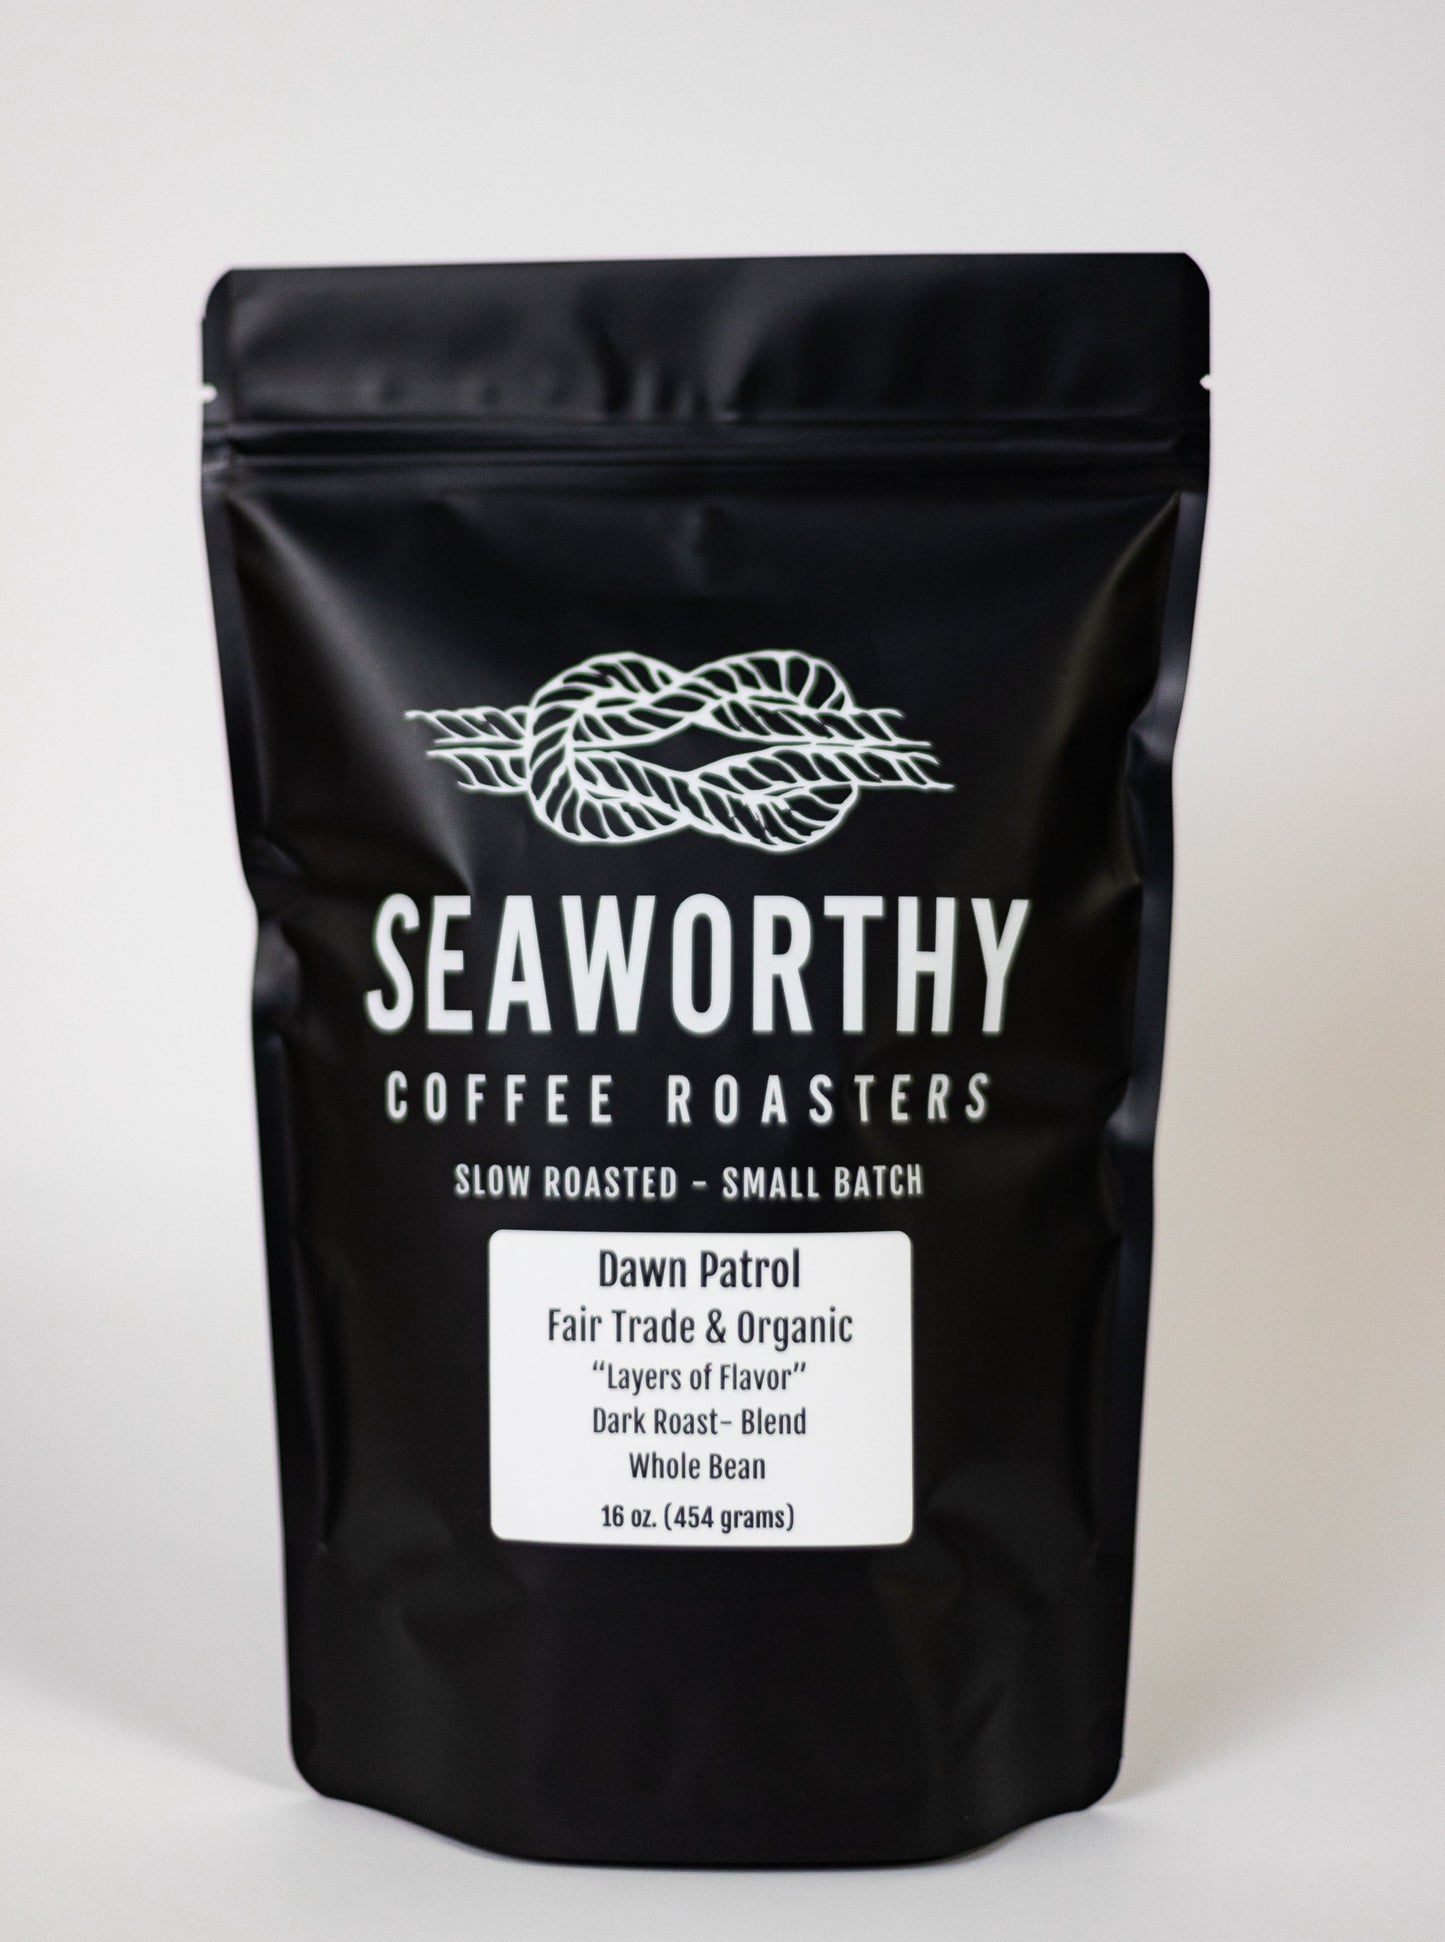 Seaworthy slow roasted, small batch, low acid coffee. 1 pound bag of Dawn Patrol dark roast specialty coffee blend.